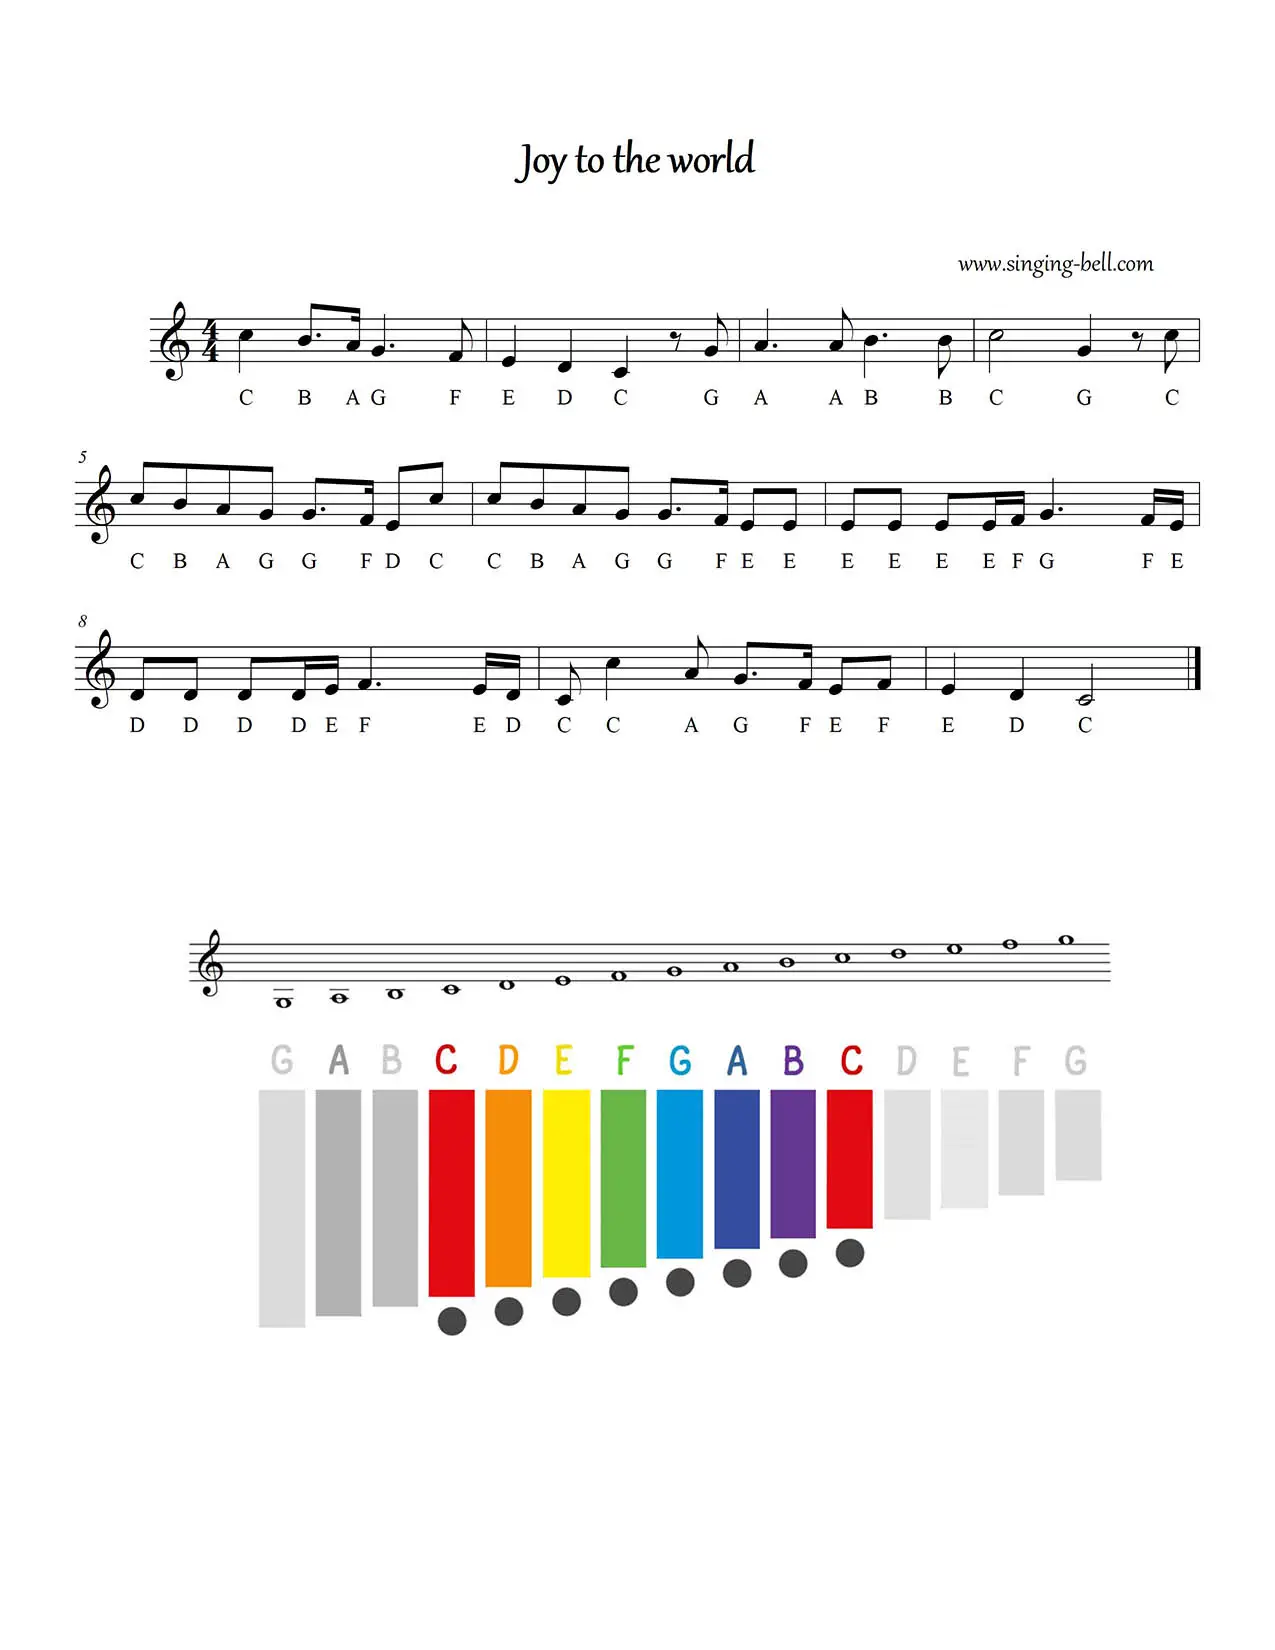 Joy to the world free xylophone glockenspiel sheet music chart notes pdf